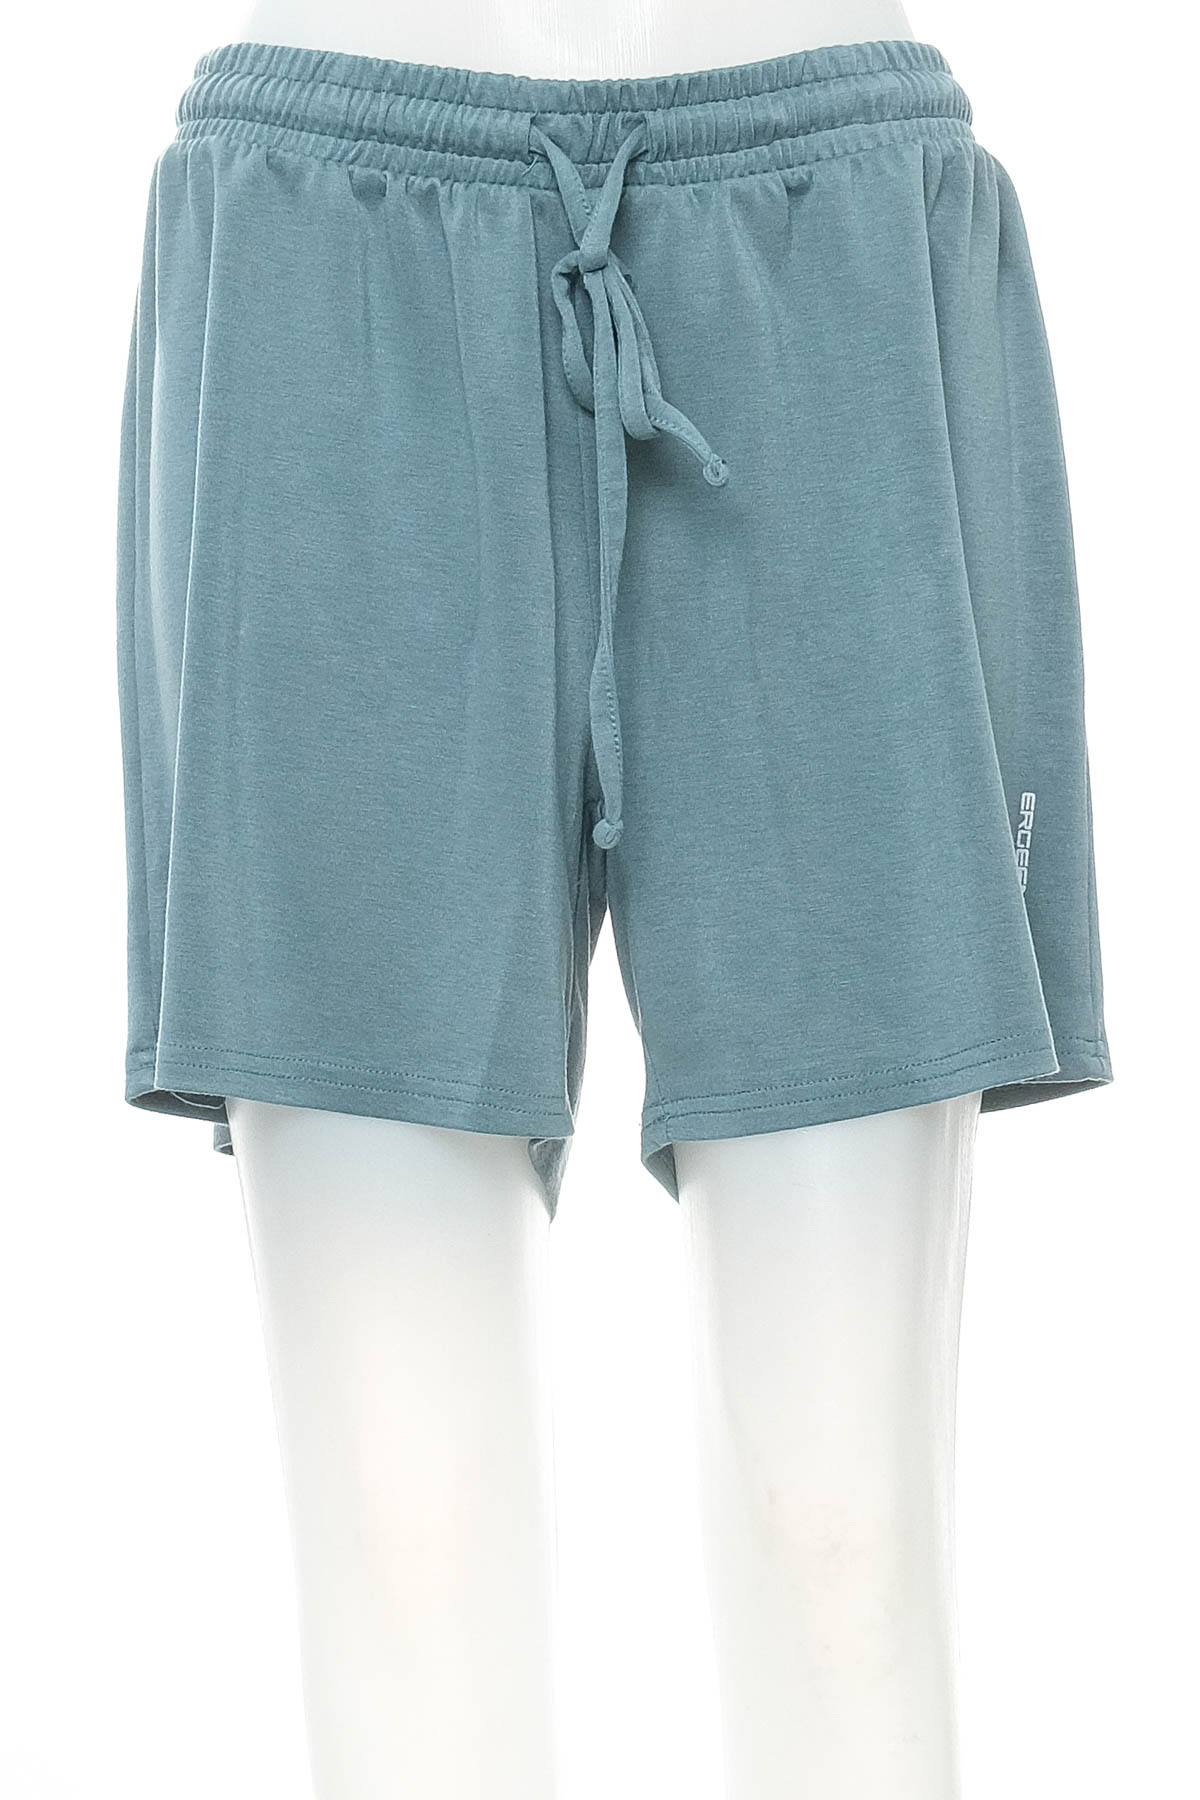 Female shorts - Ergee - 0